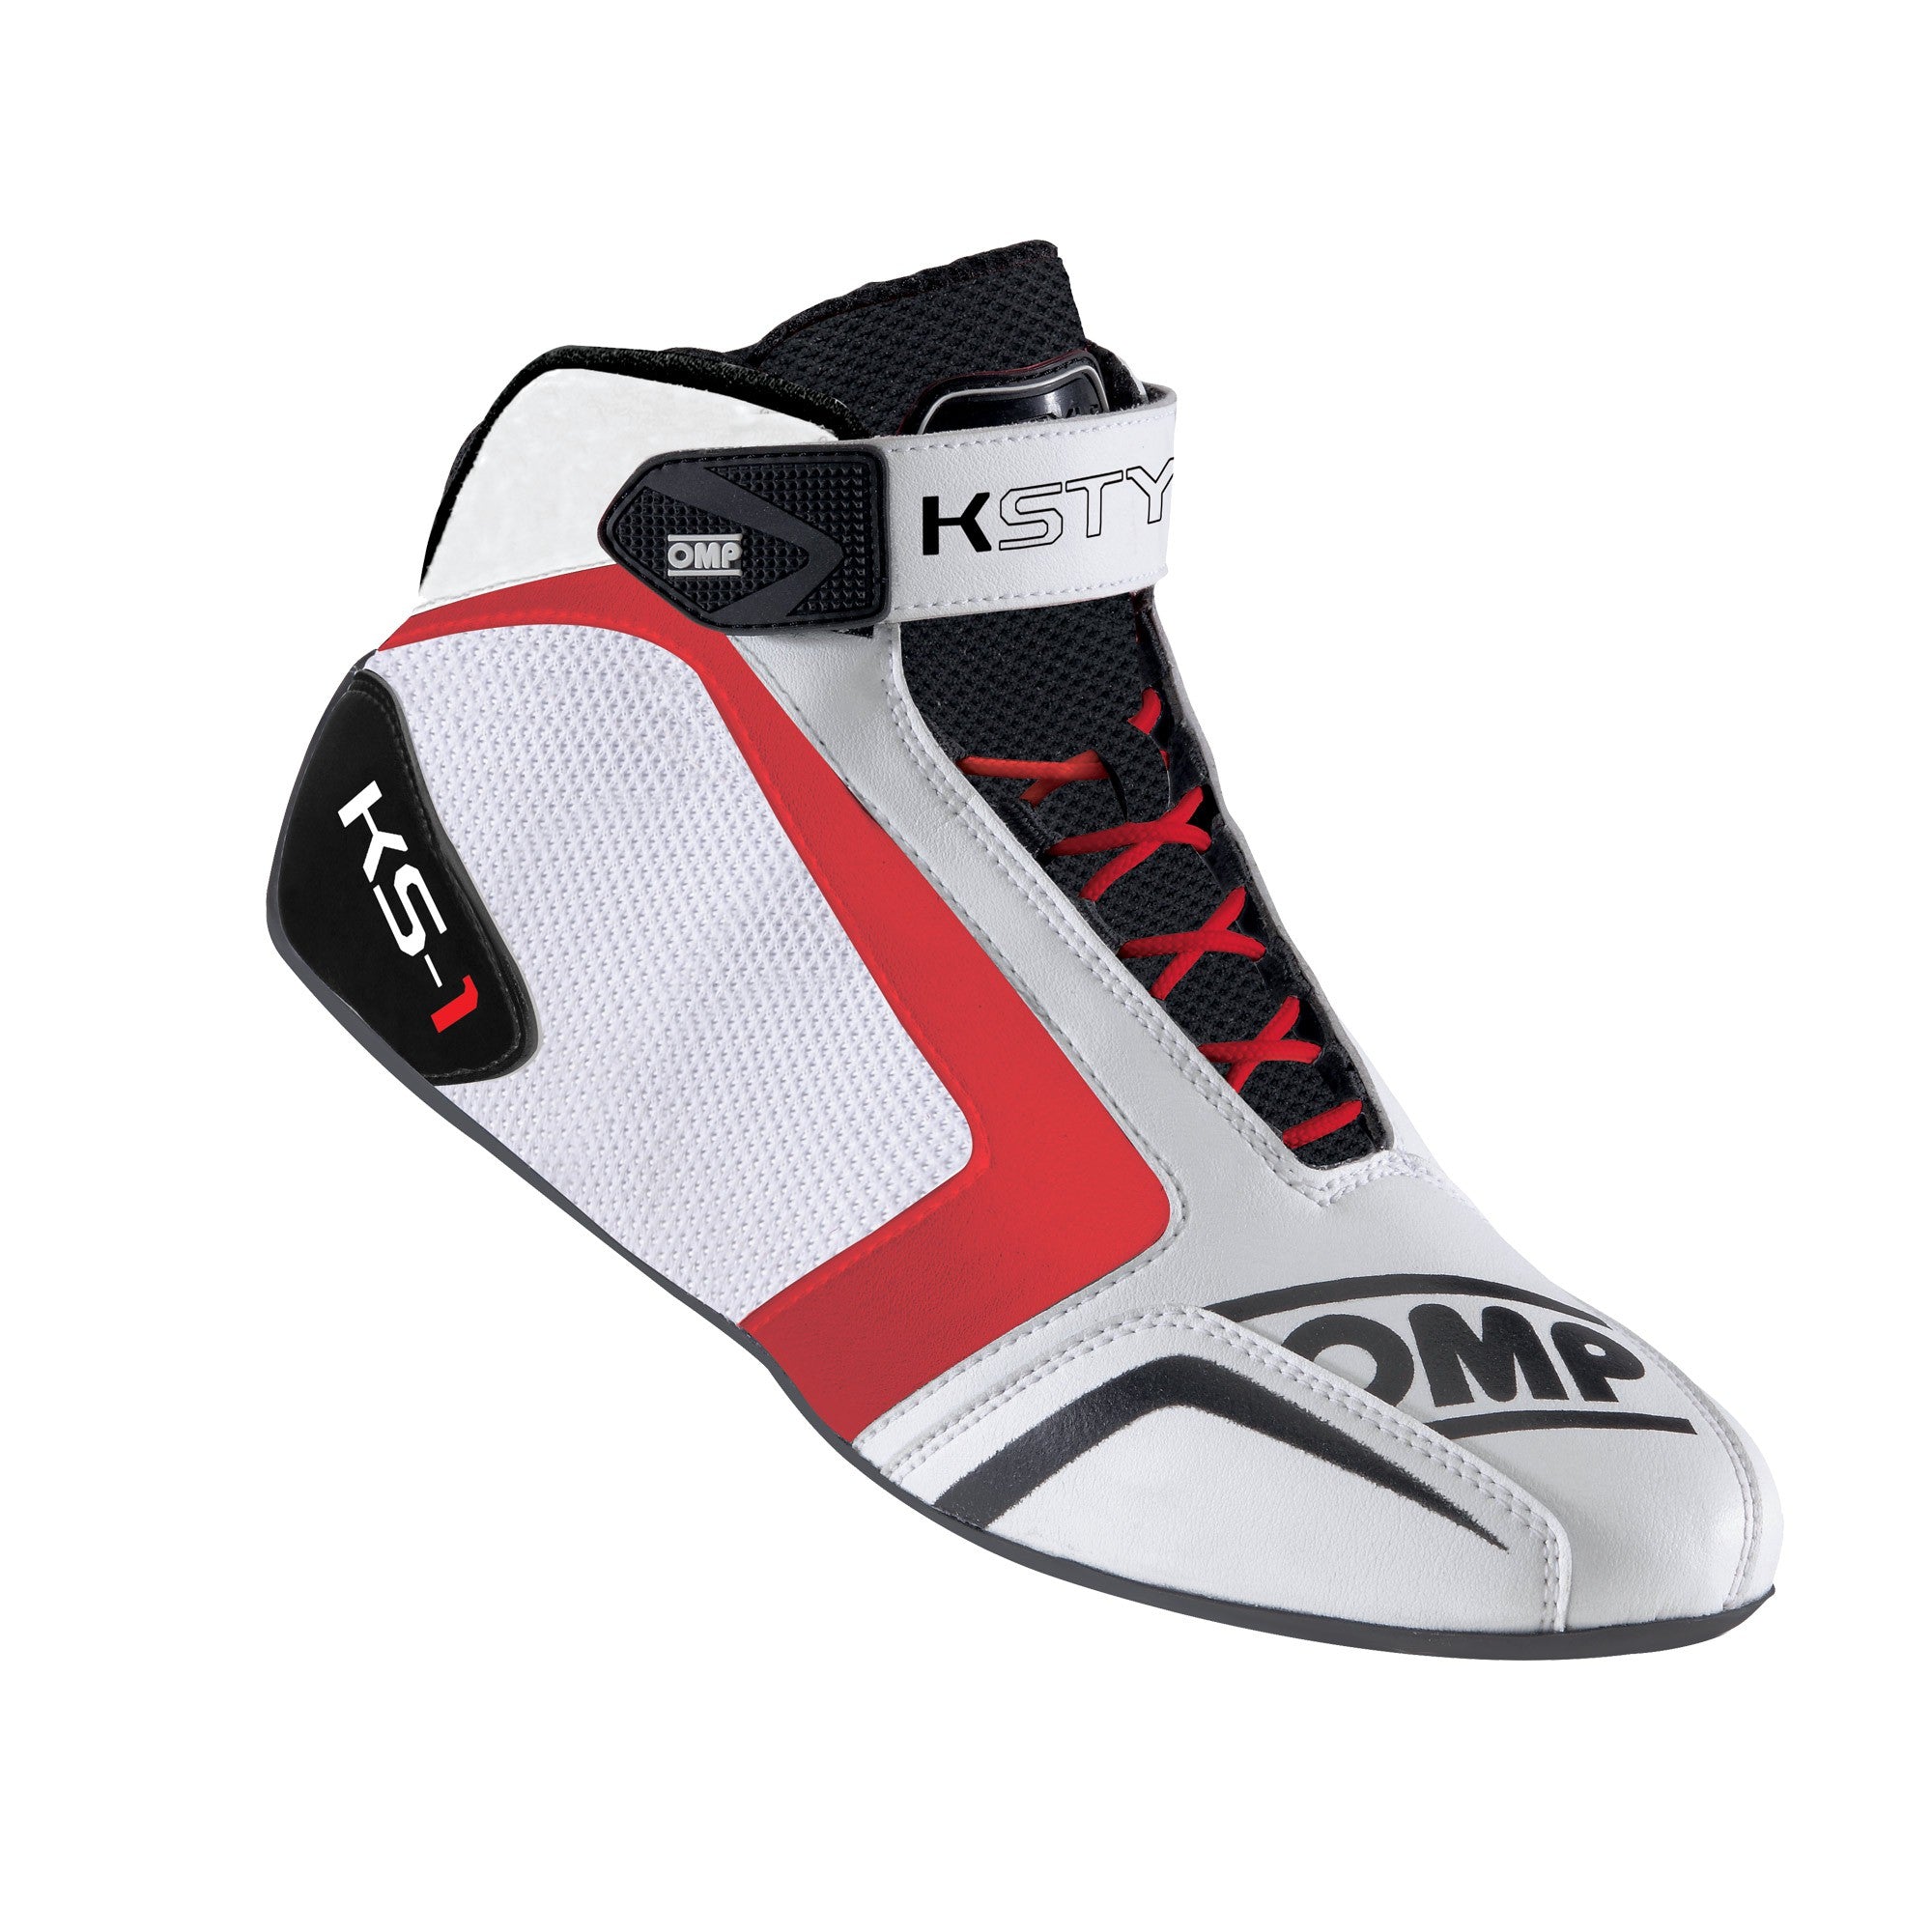 OMP KC0-0815-A01-120-45 (IC/81512045) Kart shoes KS-1, white/black/red, size 45 Photo-0 